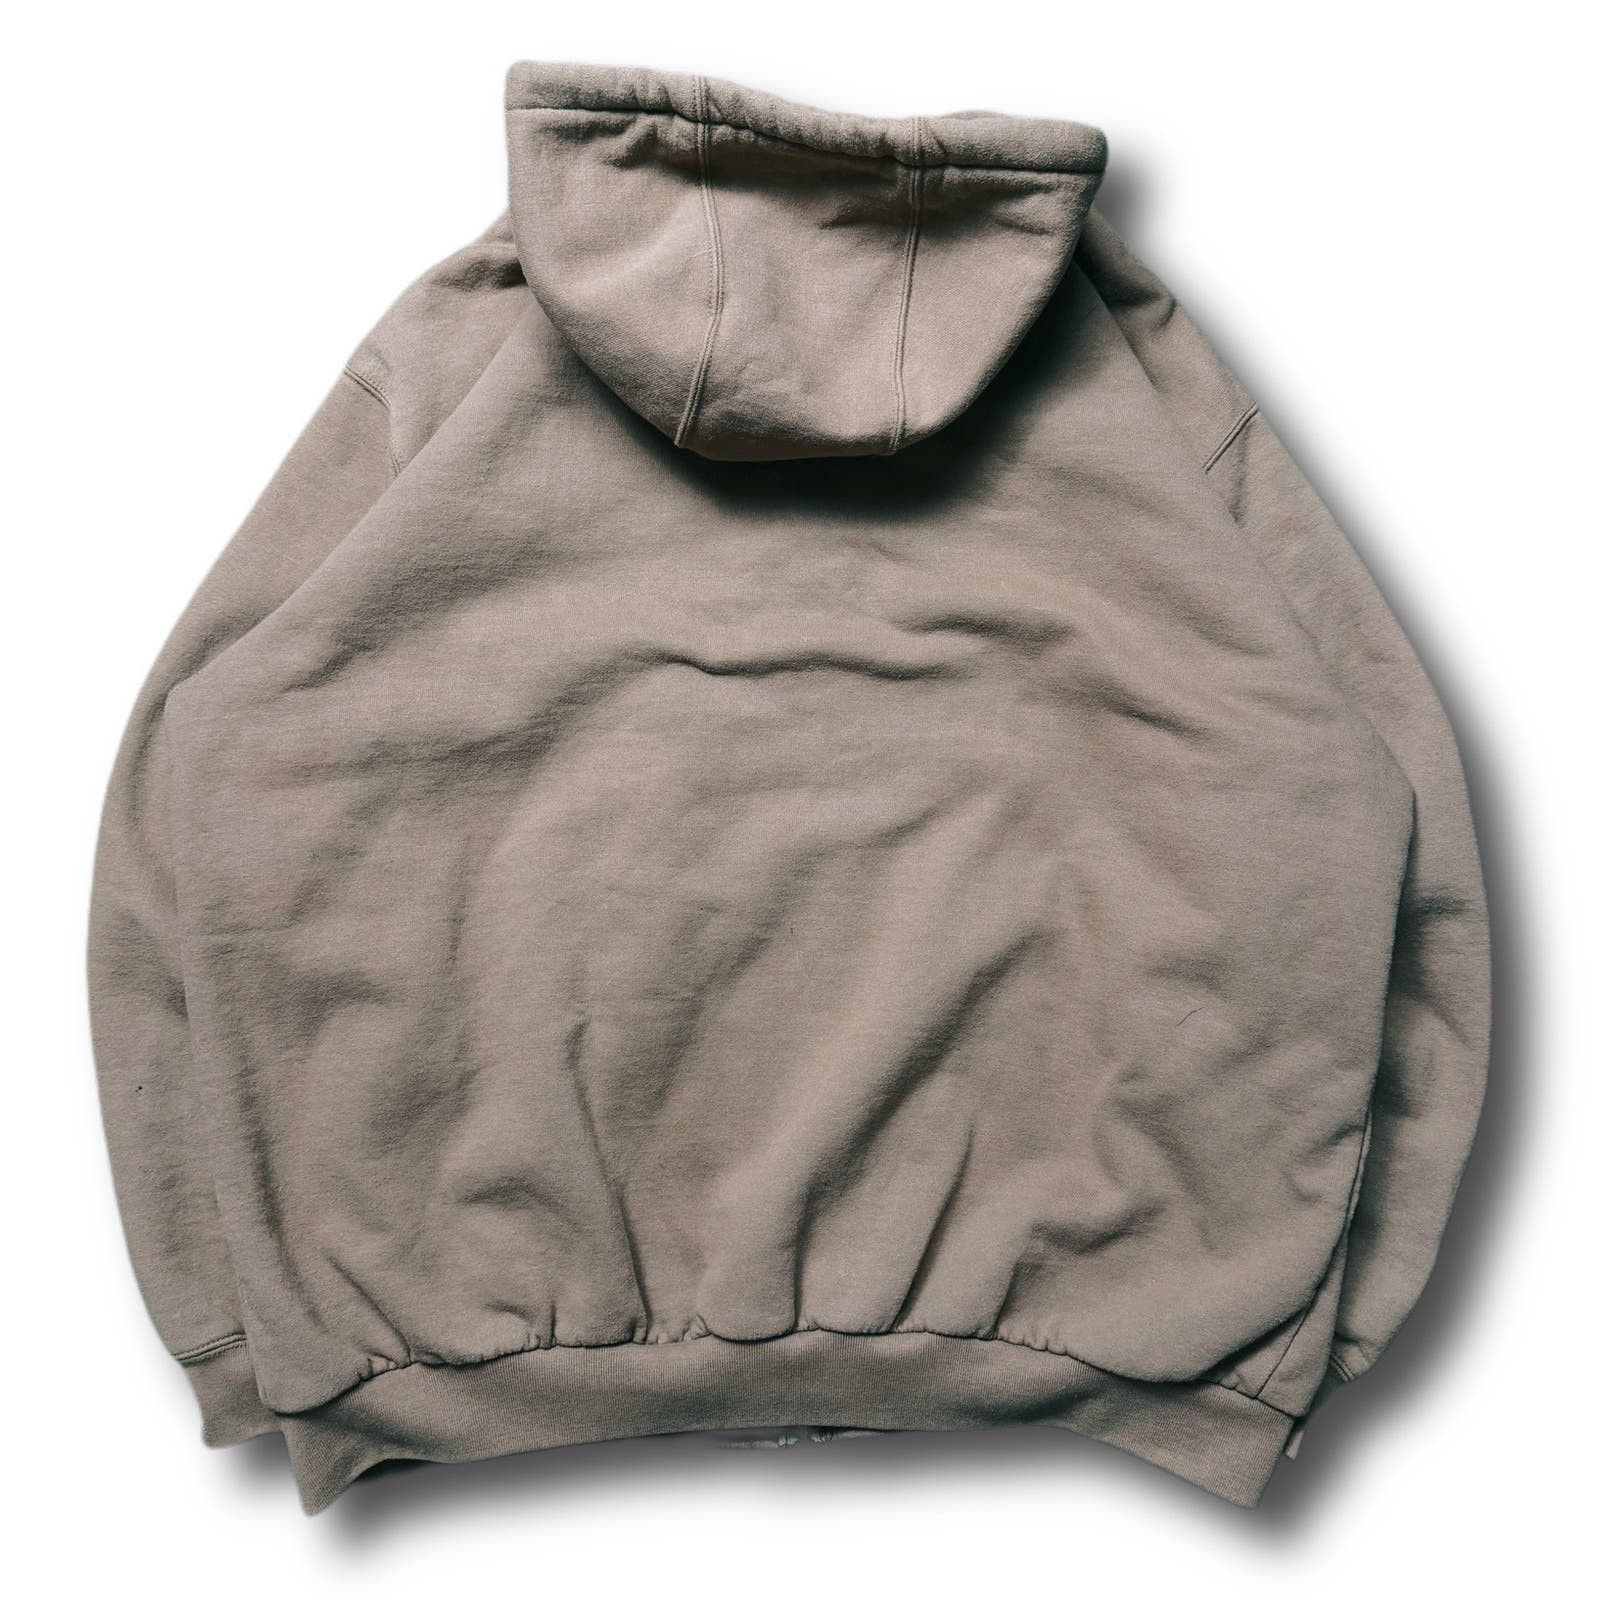 Carhartt Carhartt Workwear Weather Proof Lining Zip Up Hoodie Sweater Size US XL / EU 56 / 4 - 2 Preview